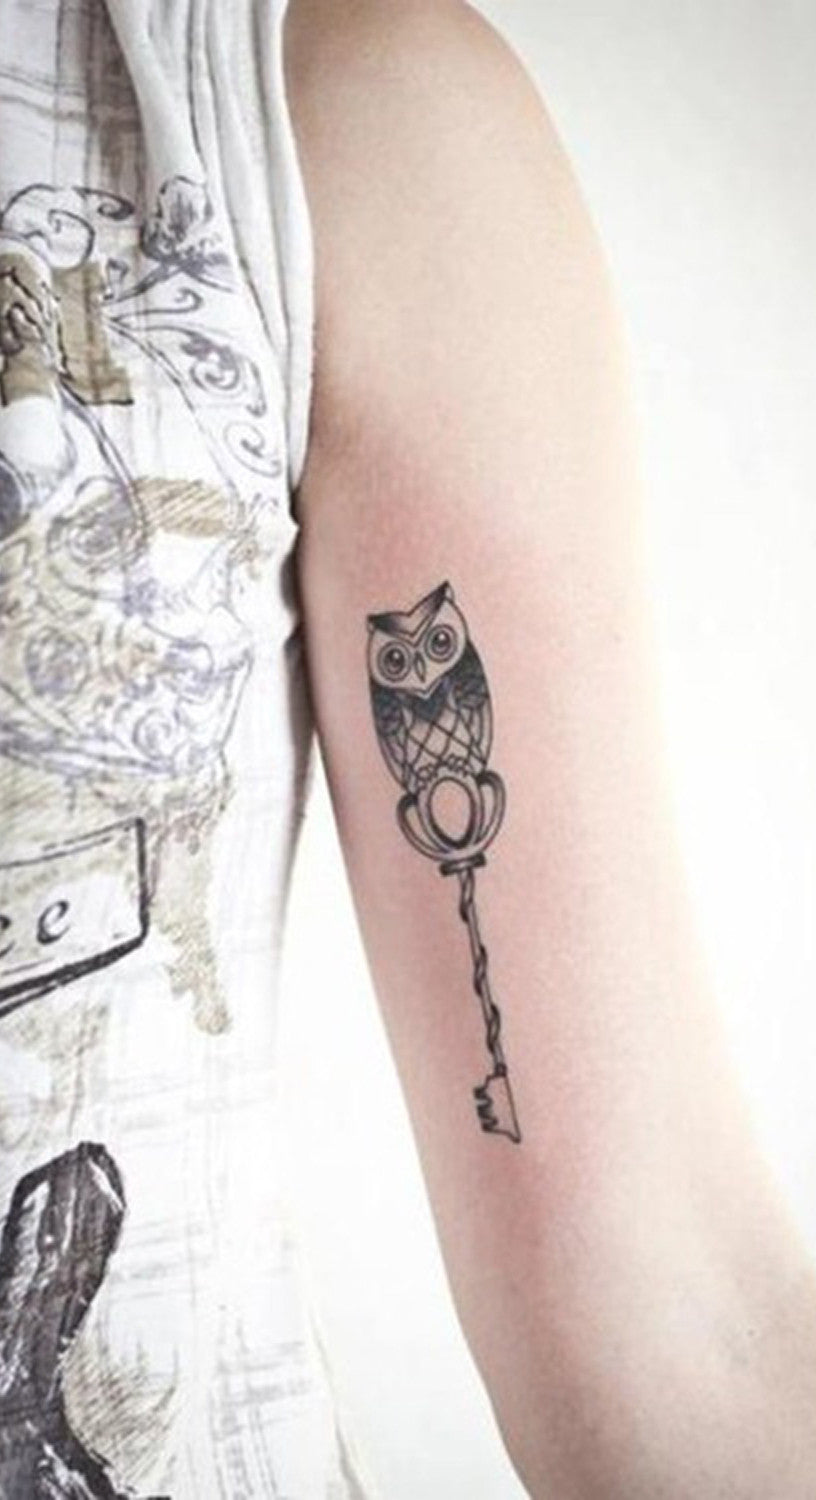 Cute Small Bird Owl Key Arm Tattoo Ideas for Women - Tricep Bicep Tat - MyBodiArt.com